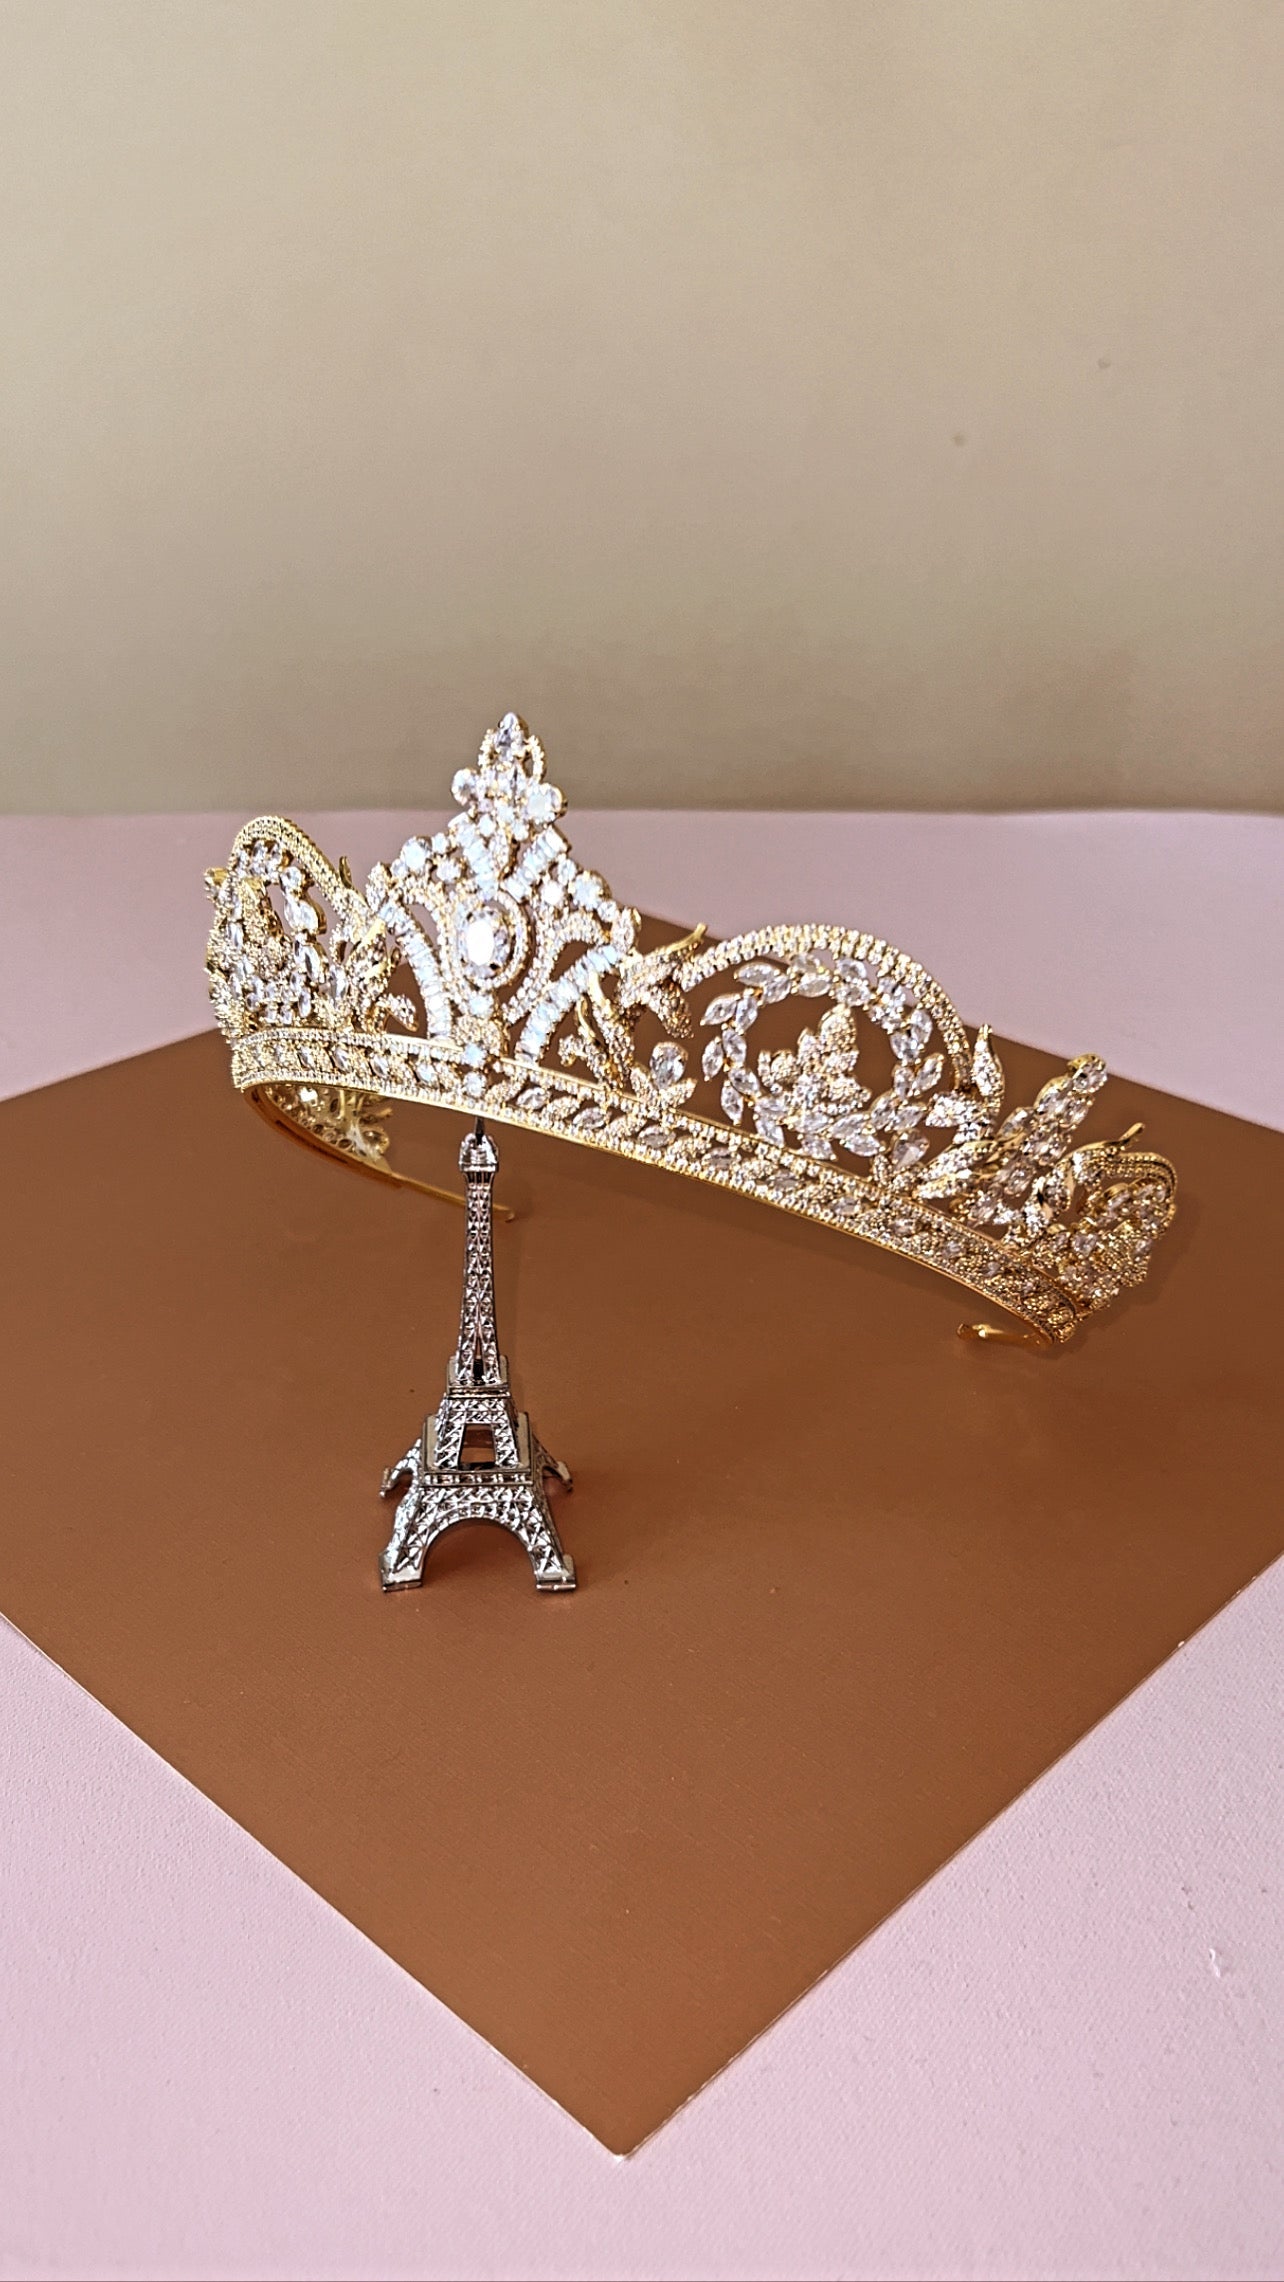 REALE Gorgeous Swarovski Crystals Wedding Tiara - SAMPLE SALE